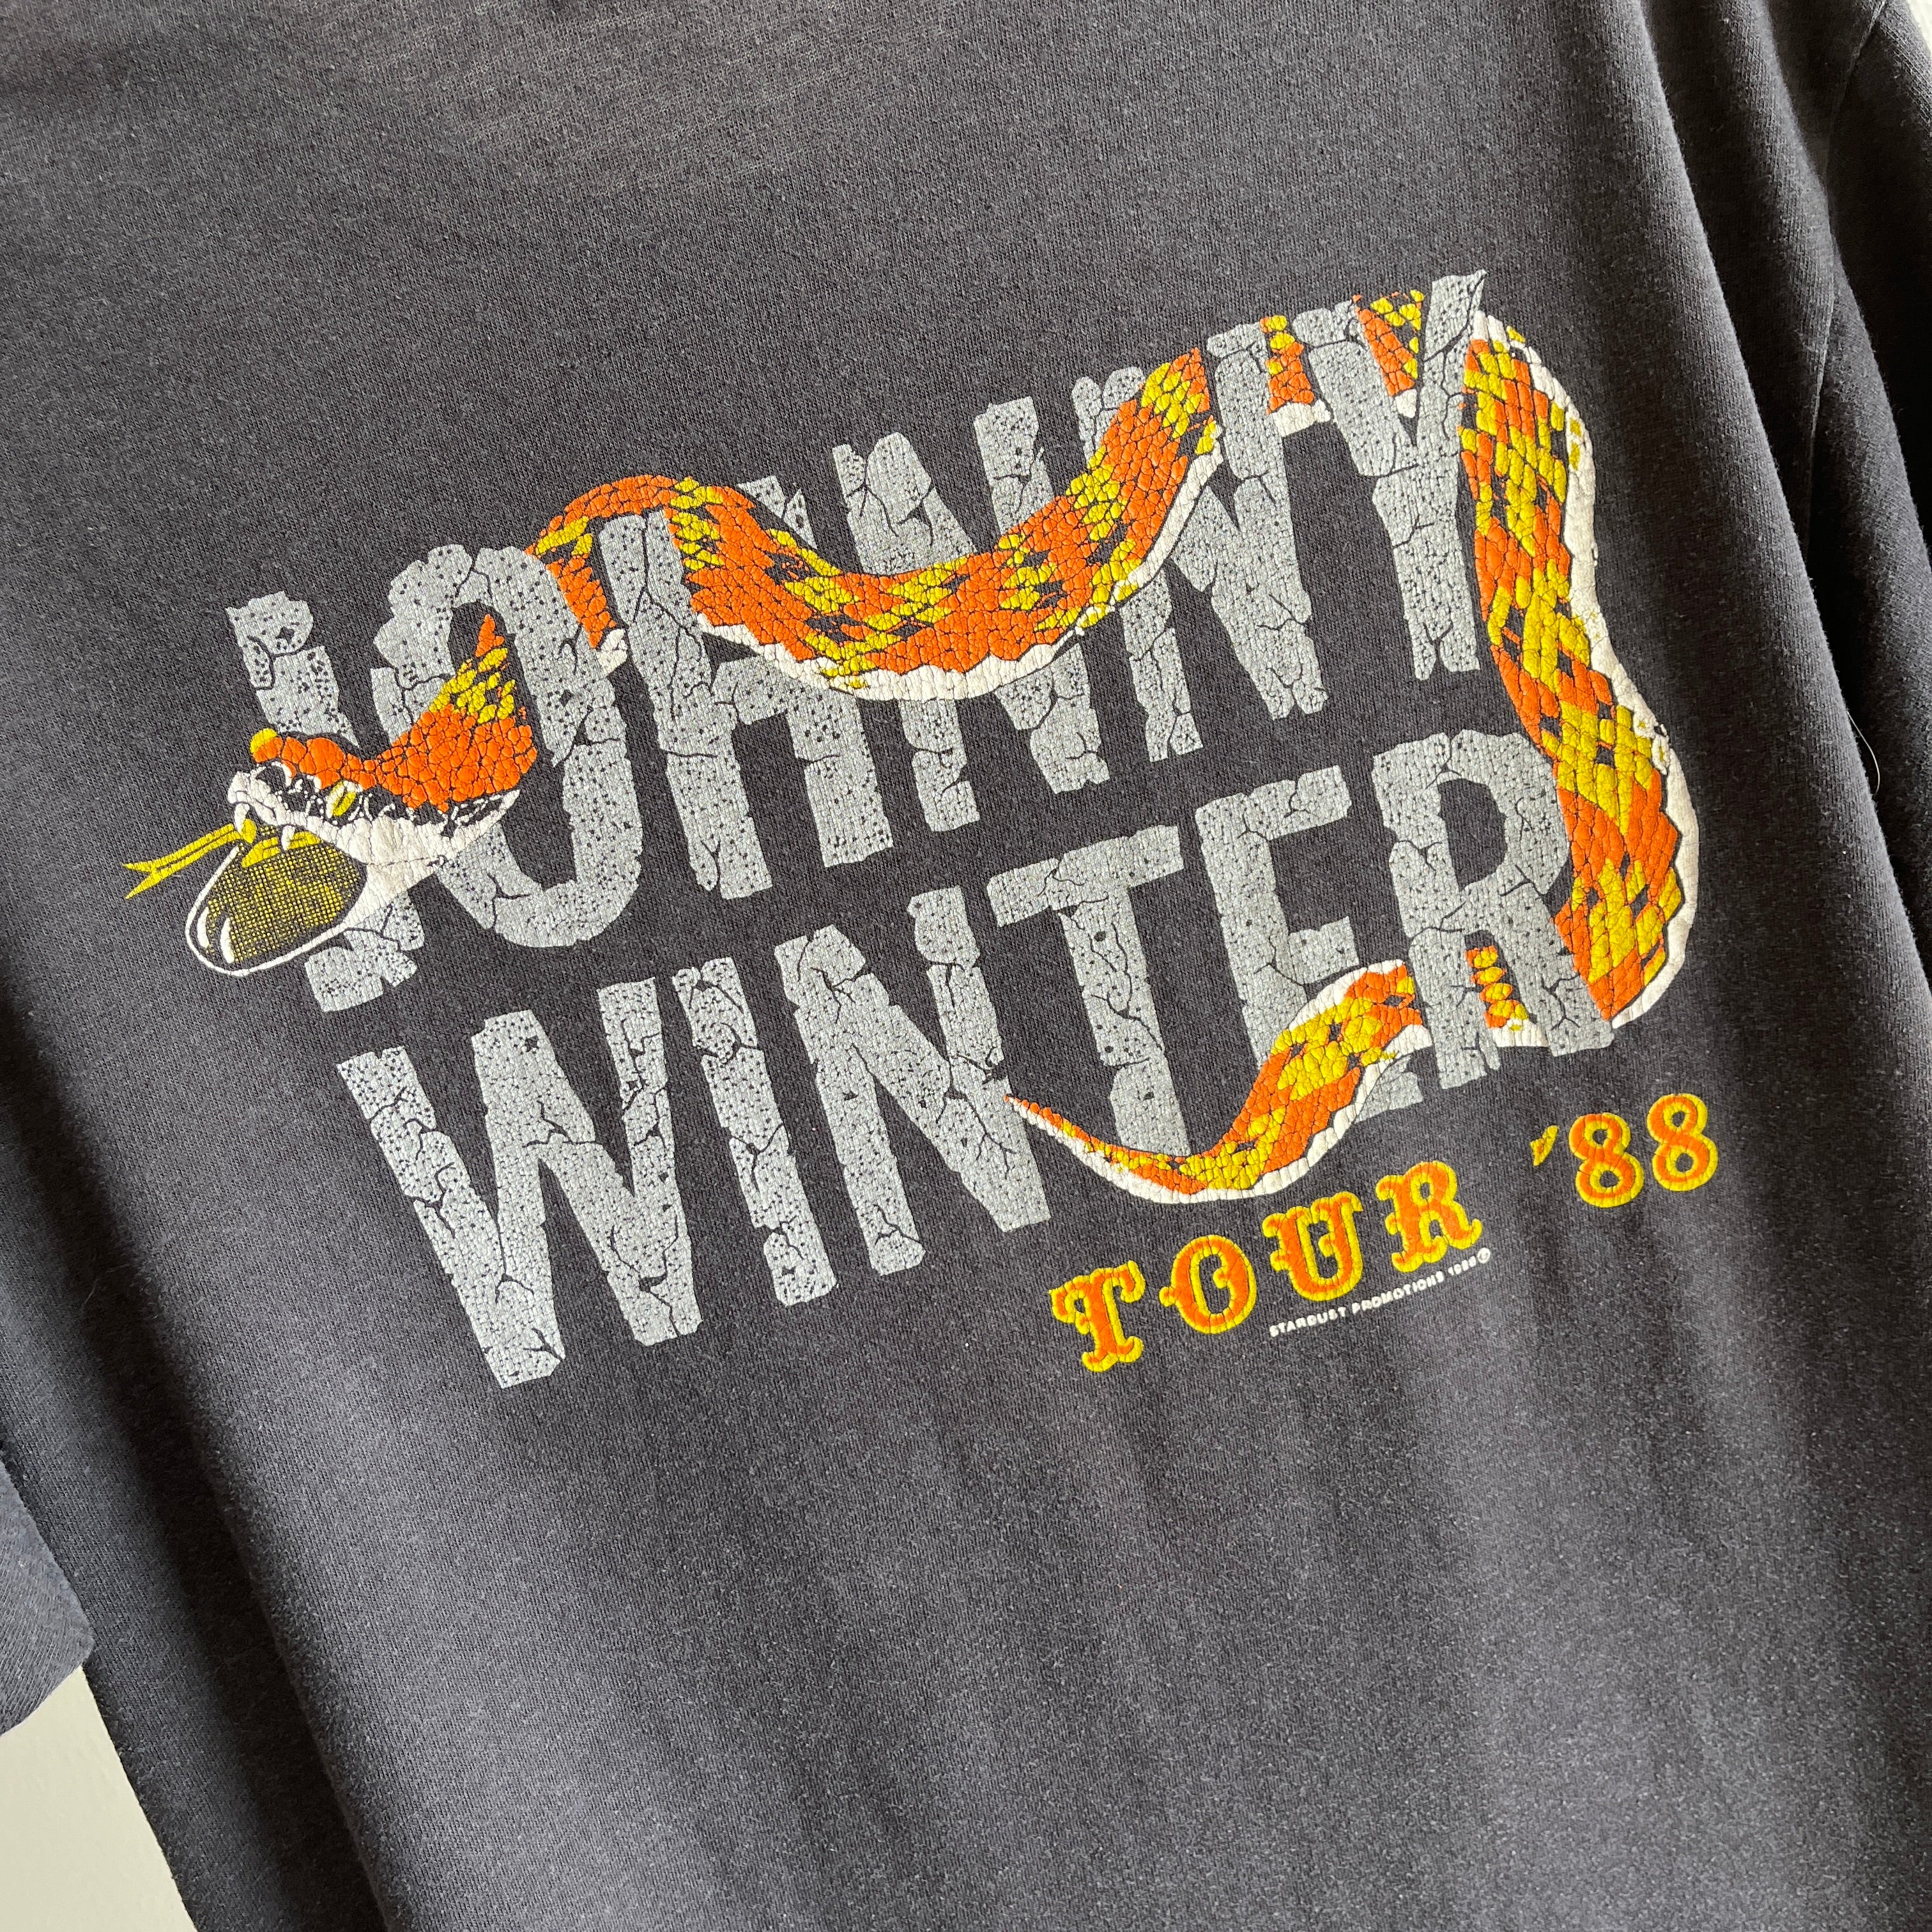 1988 Johnny Winter Tour T-Shirt - Legit!